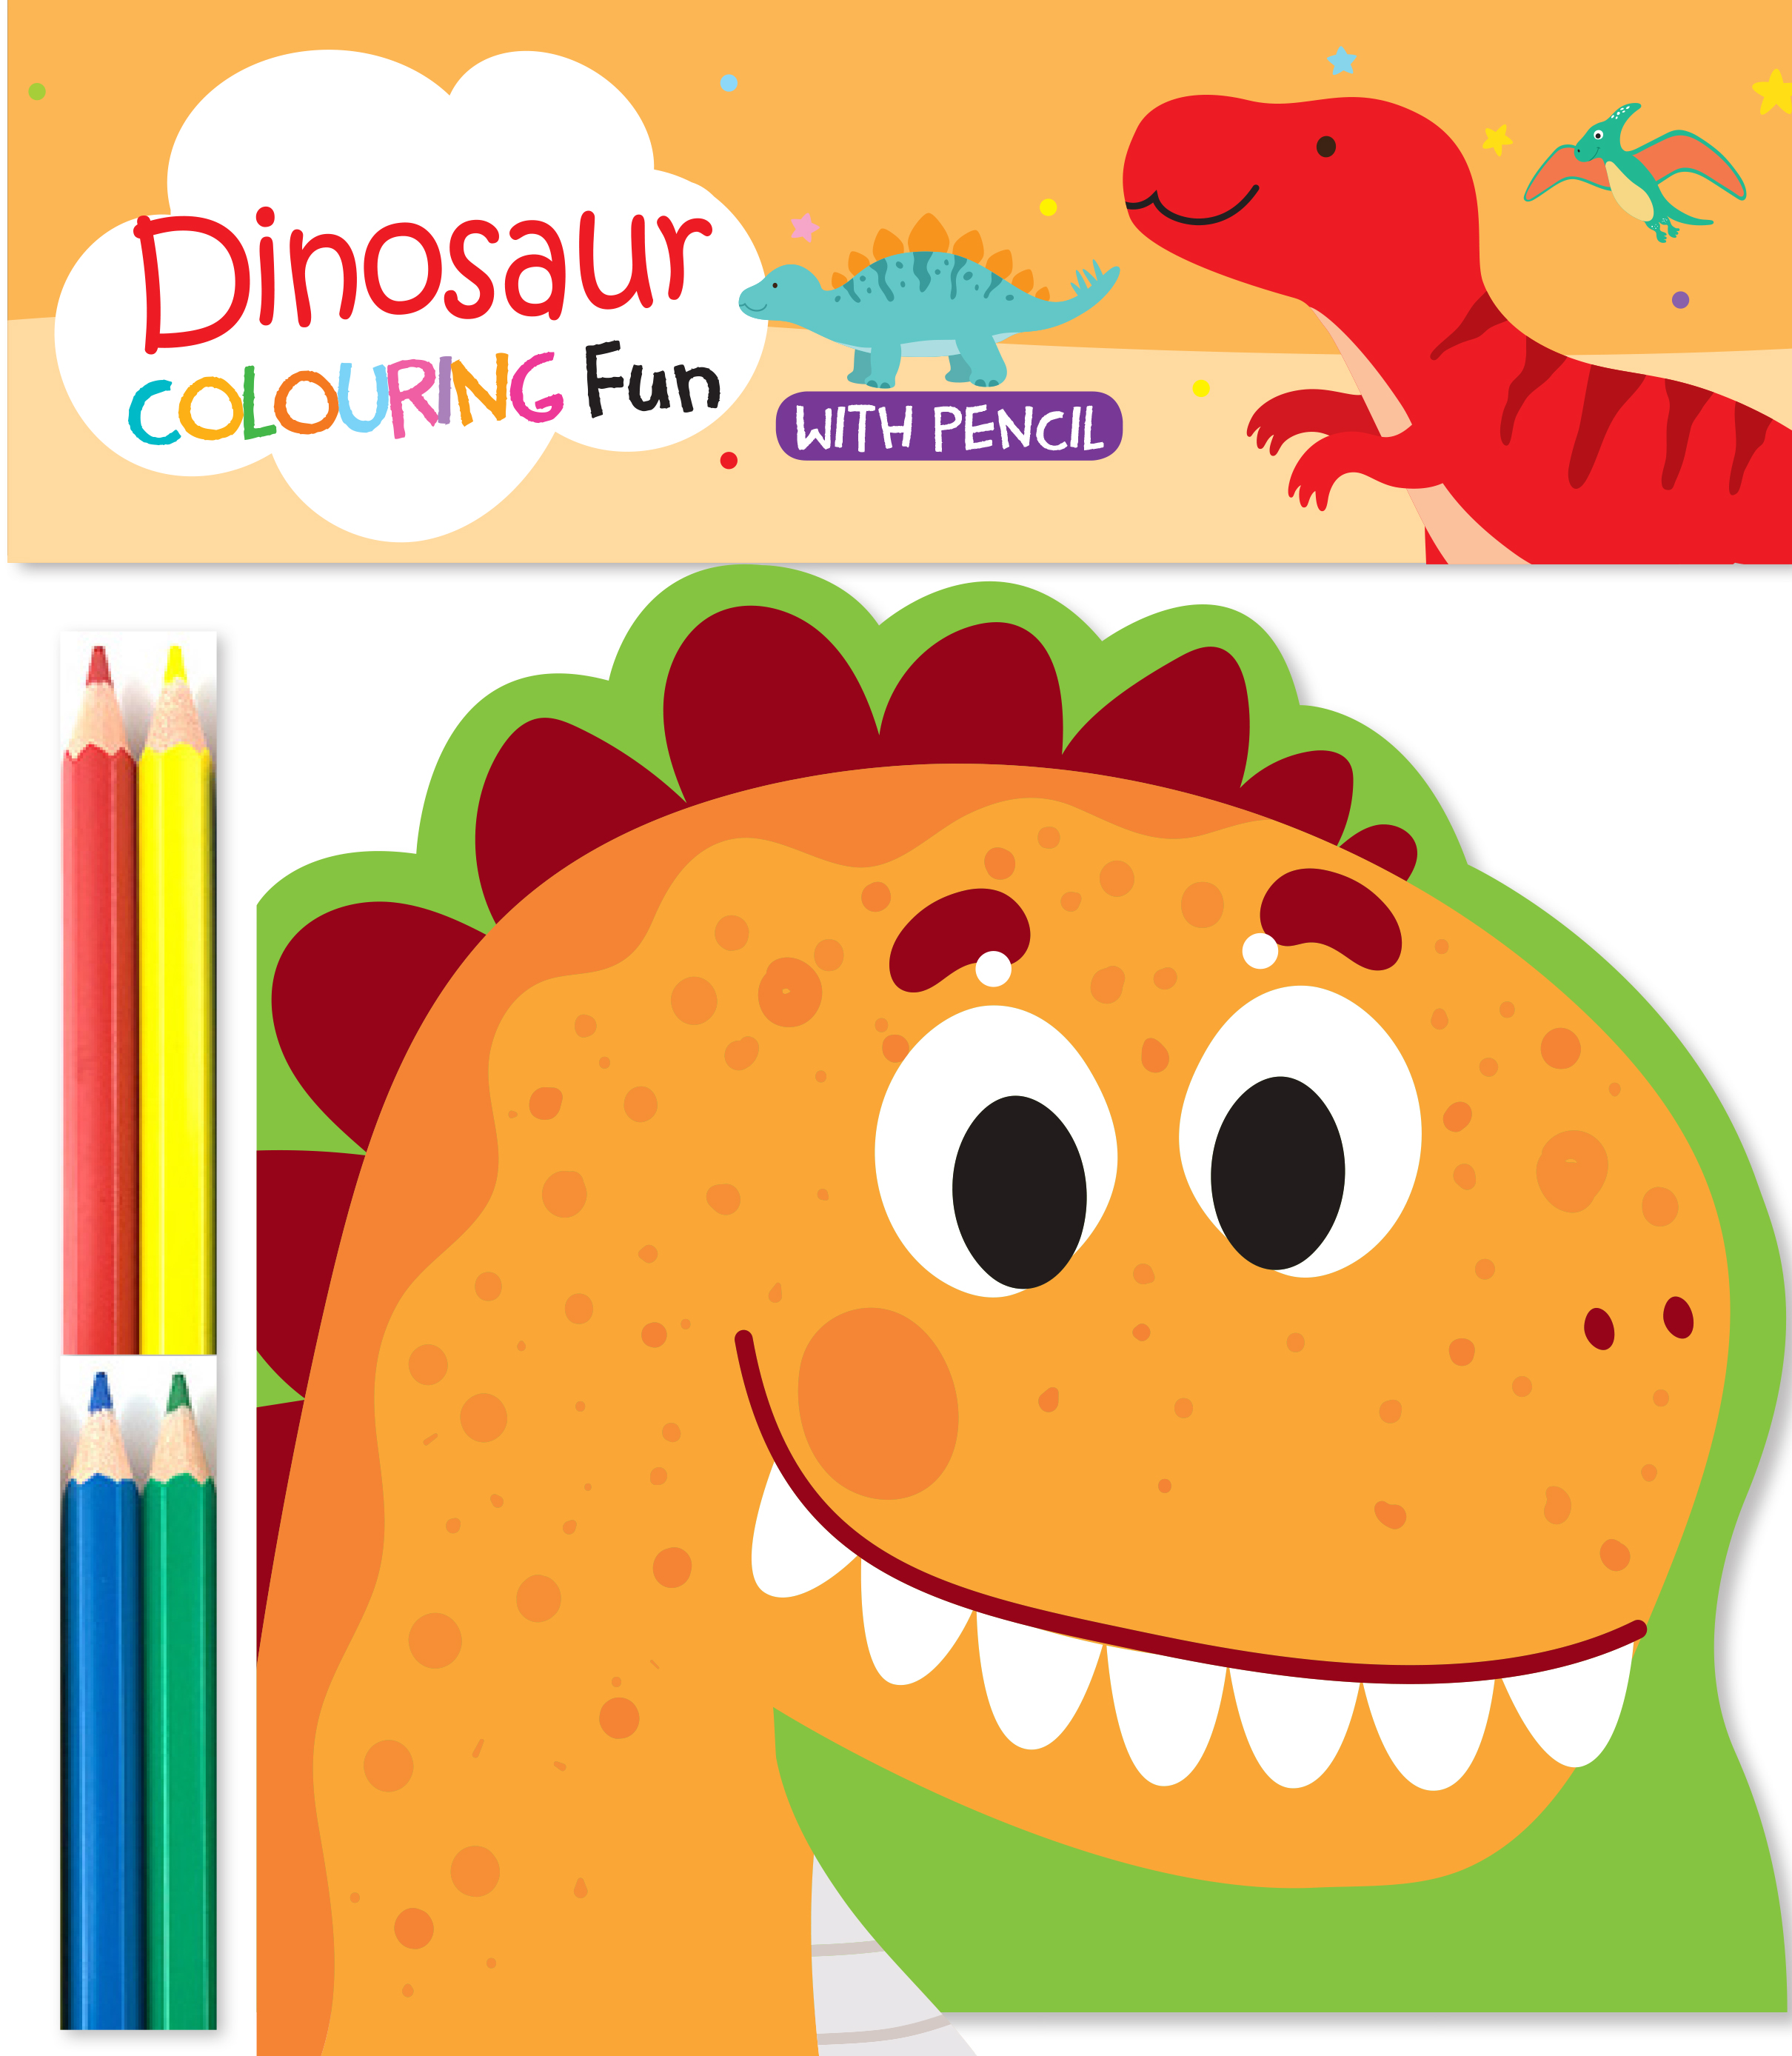 Dinosaur Colouring Fun with Pencil 